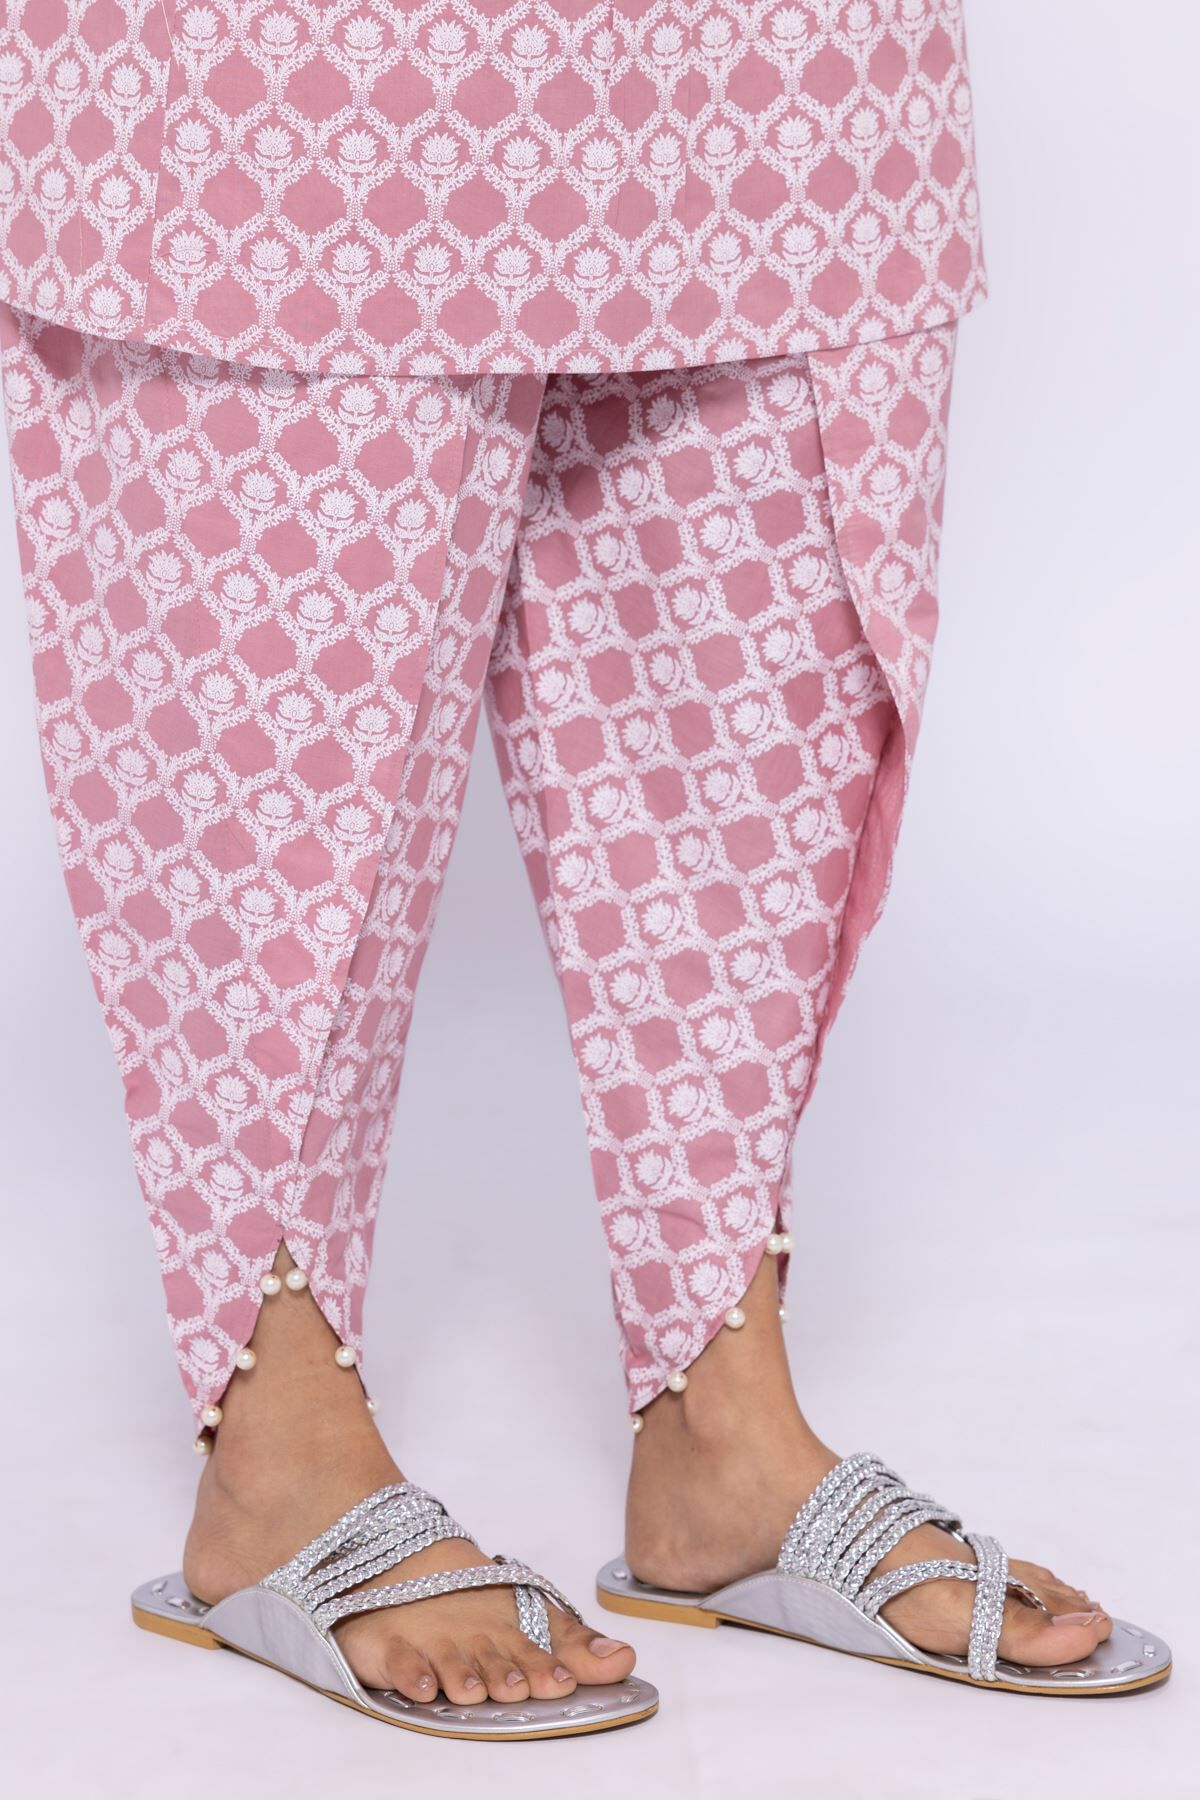 Buy Elegant Pakistani Tulip Pants With Pearl Embellishments Online in India   Etsy